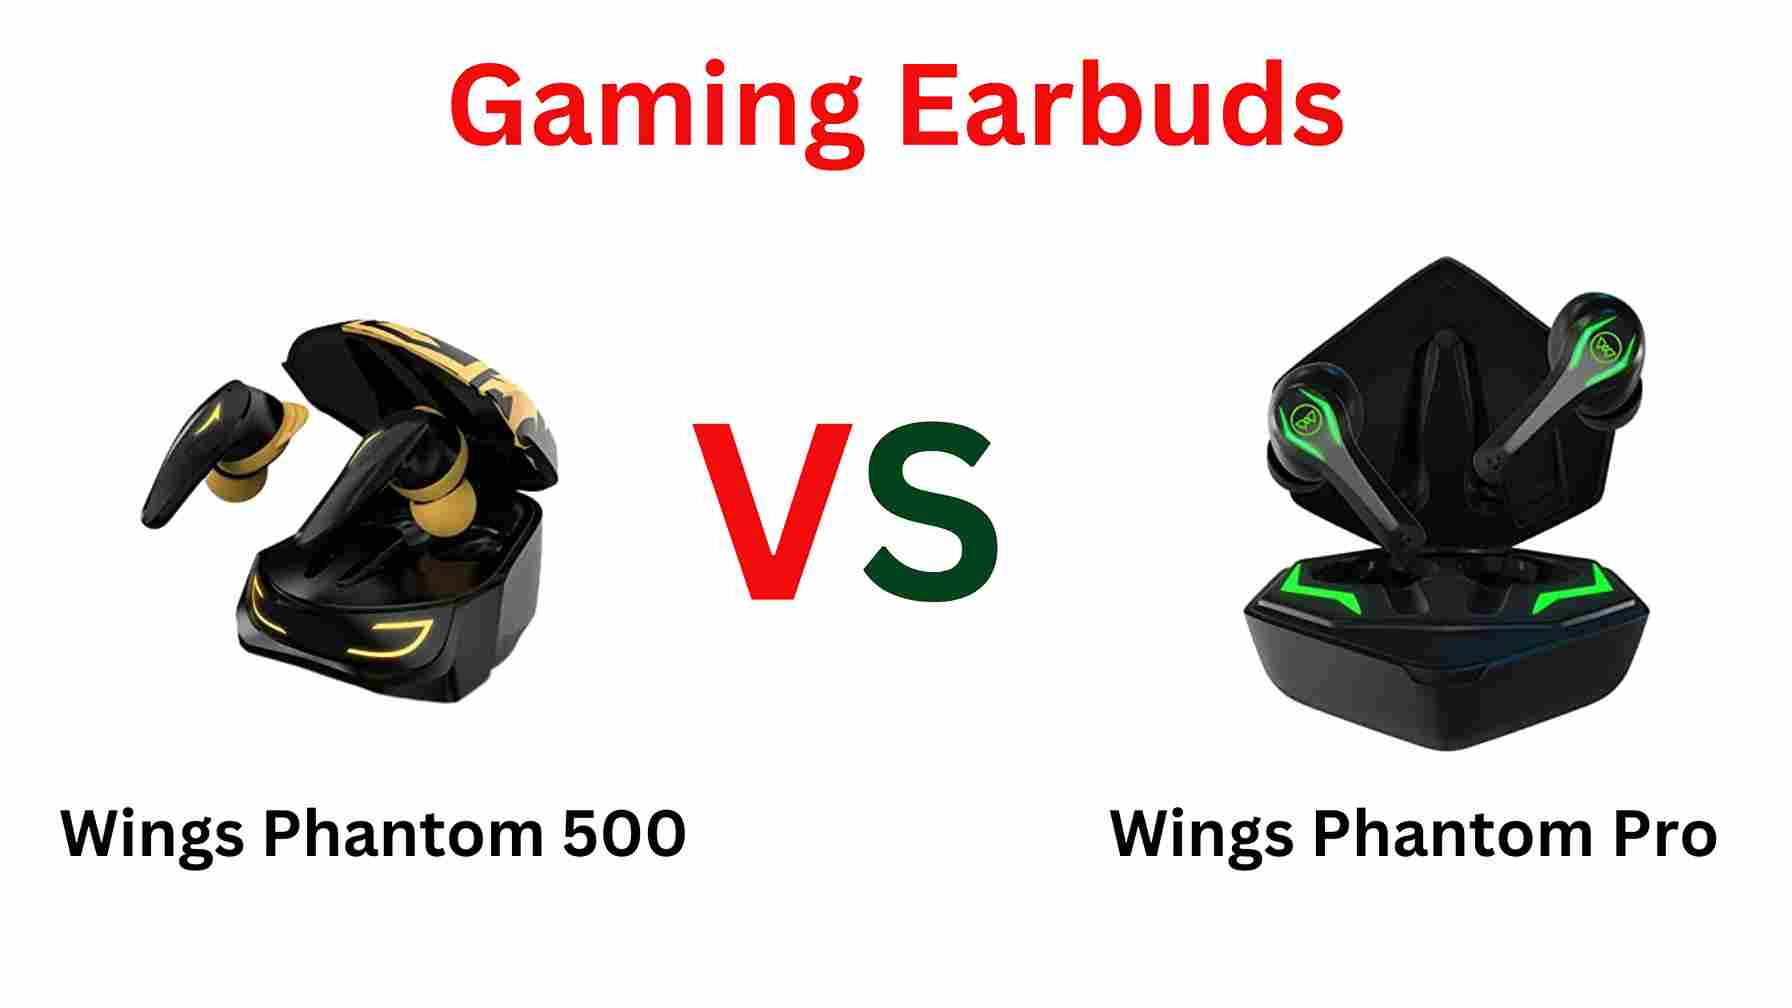 Wings Phantom 500 Vs Wings Phantom Pro